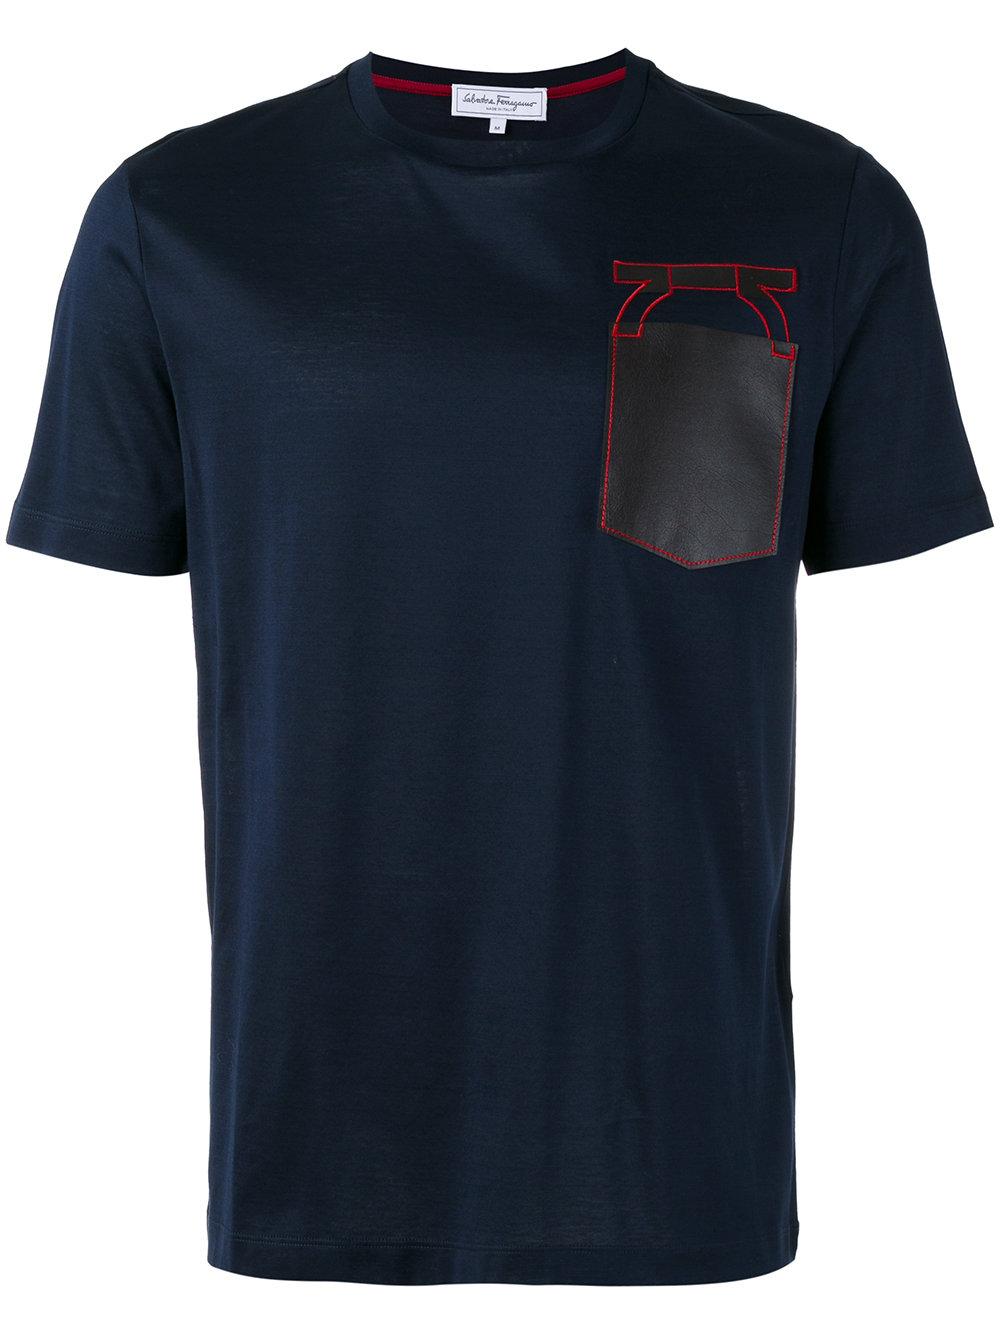 Ferragamo Cotton Contrast Pocket T-shirt in Blue for Men - Lyst